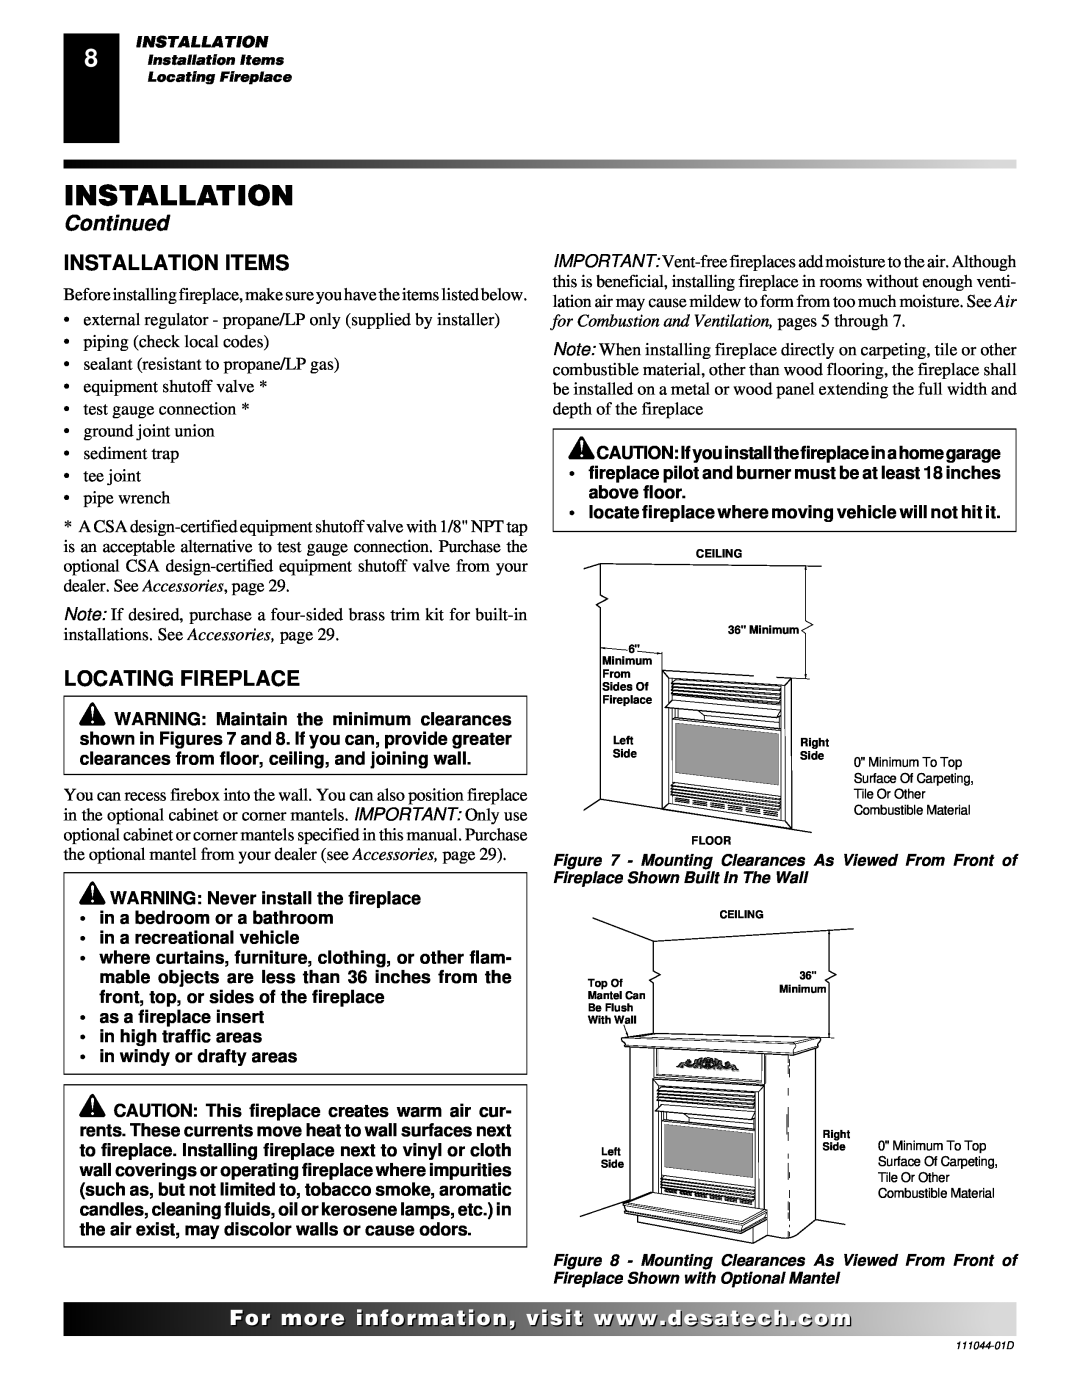 Desa Tech CGCFTP, CGCFTN installation manual Installation Items, Locating Fireplace, Continued 